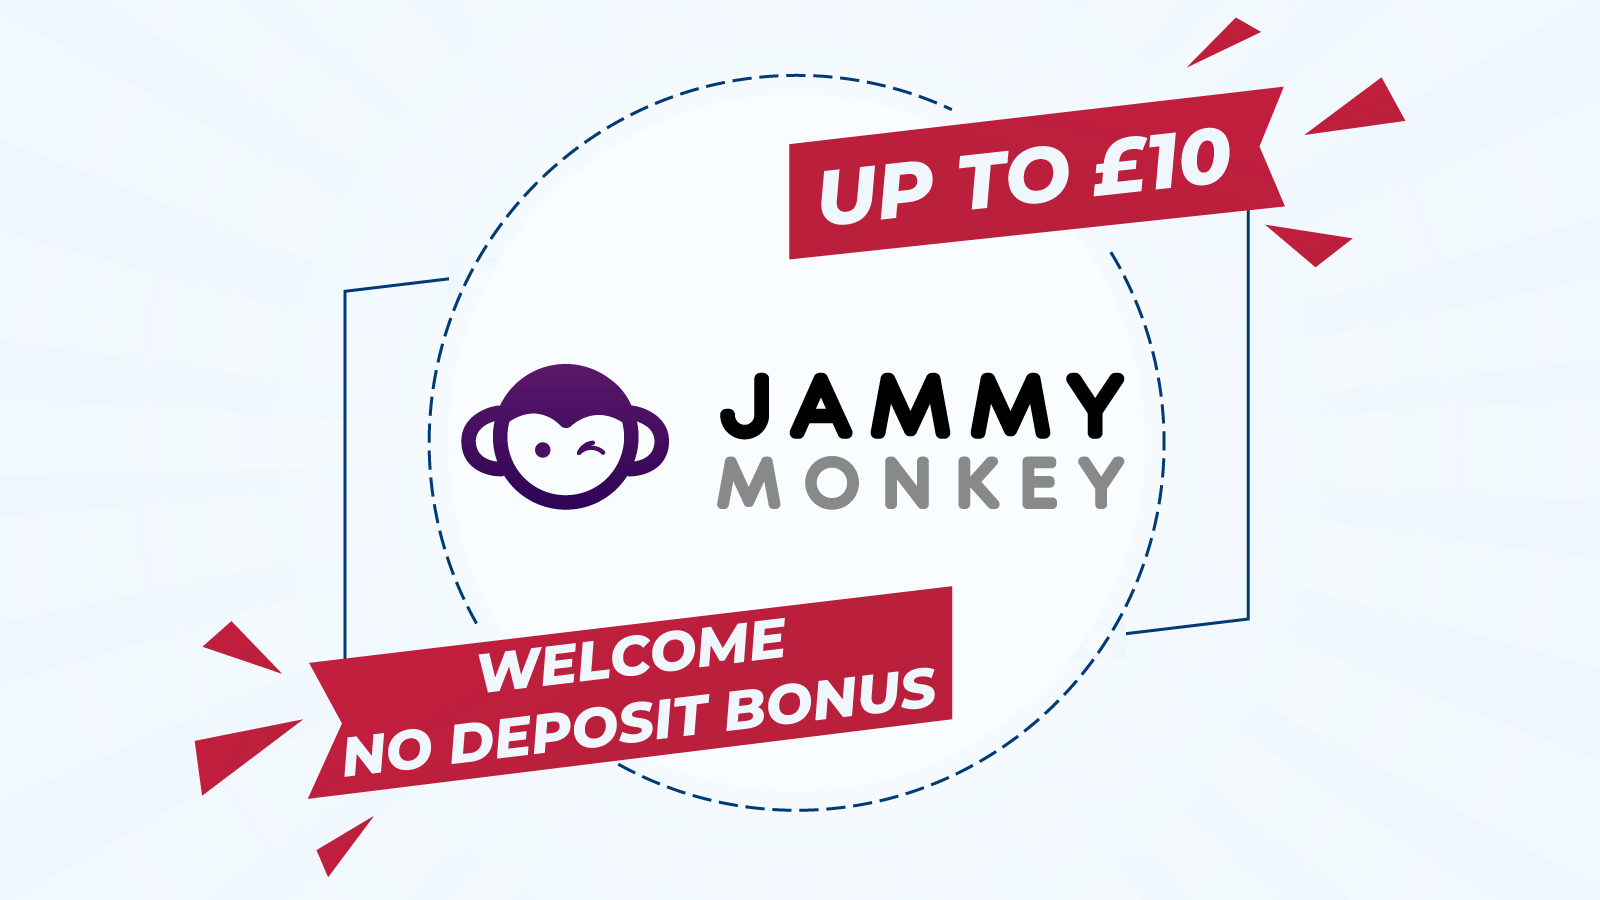 Up to £10 Welcome no deposit bonus at Jammy Monkey